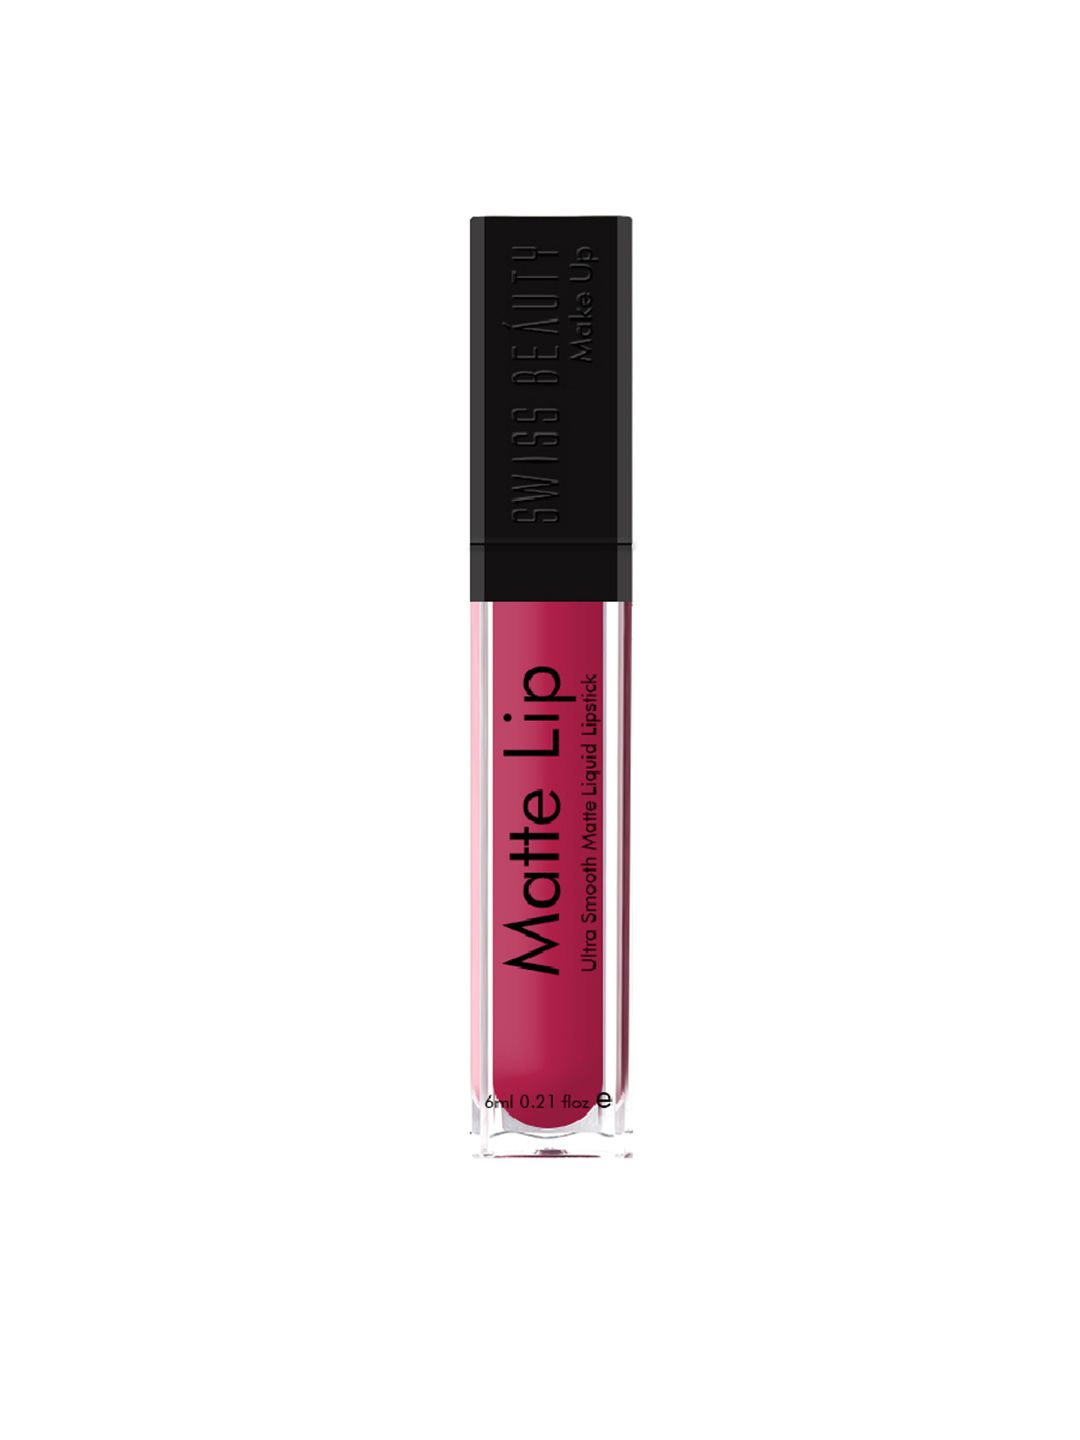 SWISS BEAUTY Matte Lip Ultra Smooth Matte Liquid Lipstick-Epic Magenta 16 Price in India